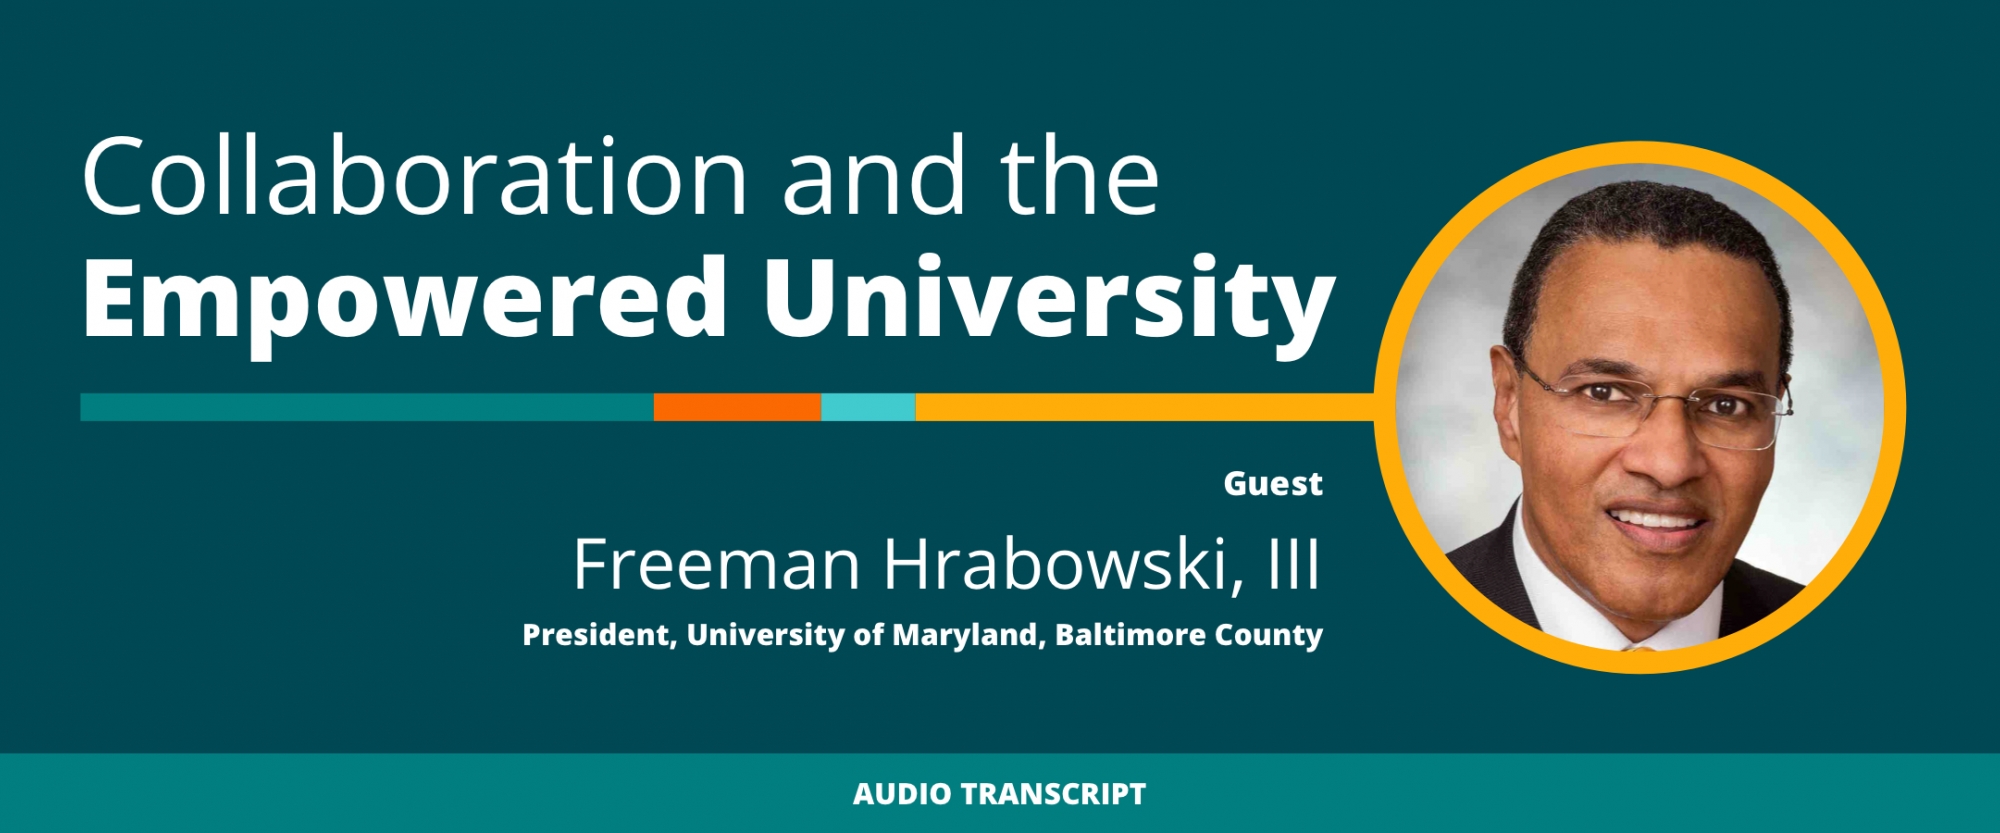 Weekly Wisdom 6/8/21: Transcript of Conversation With Freeman Hrabowski, President, University of Maryland, Baltimore County